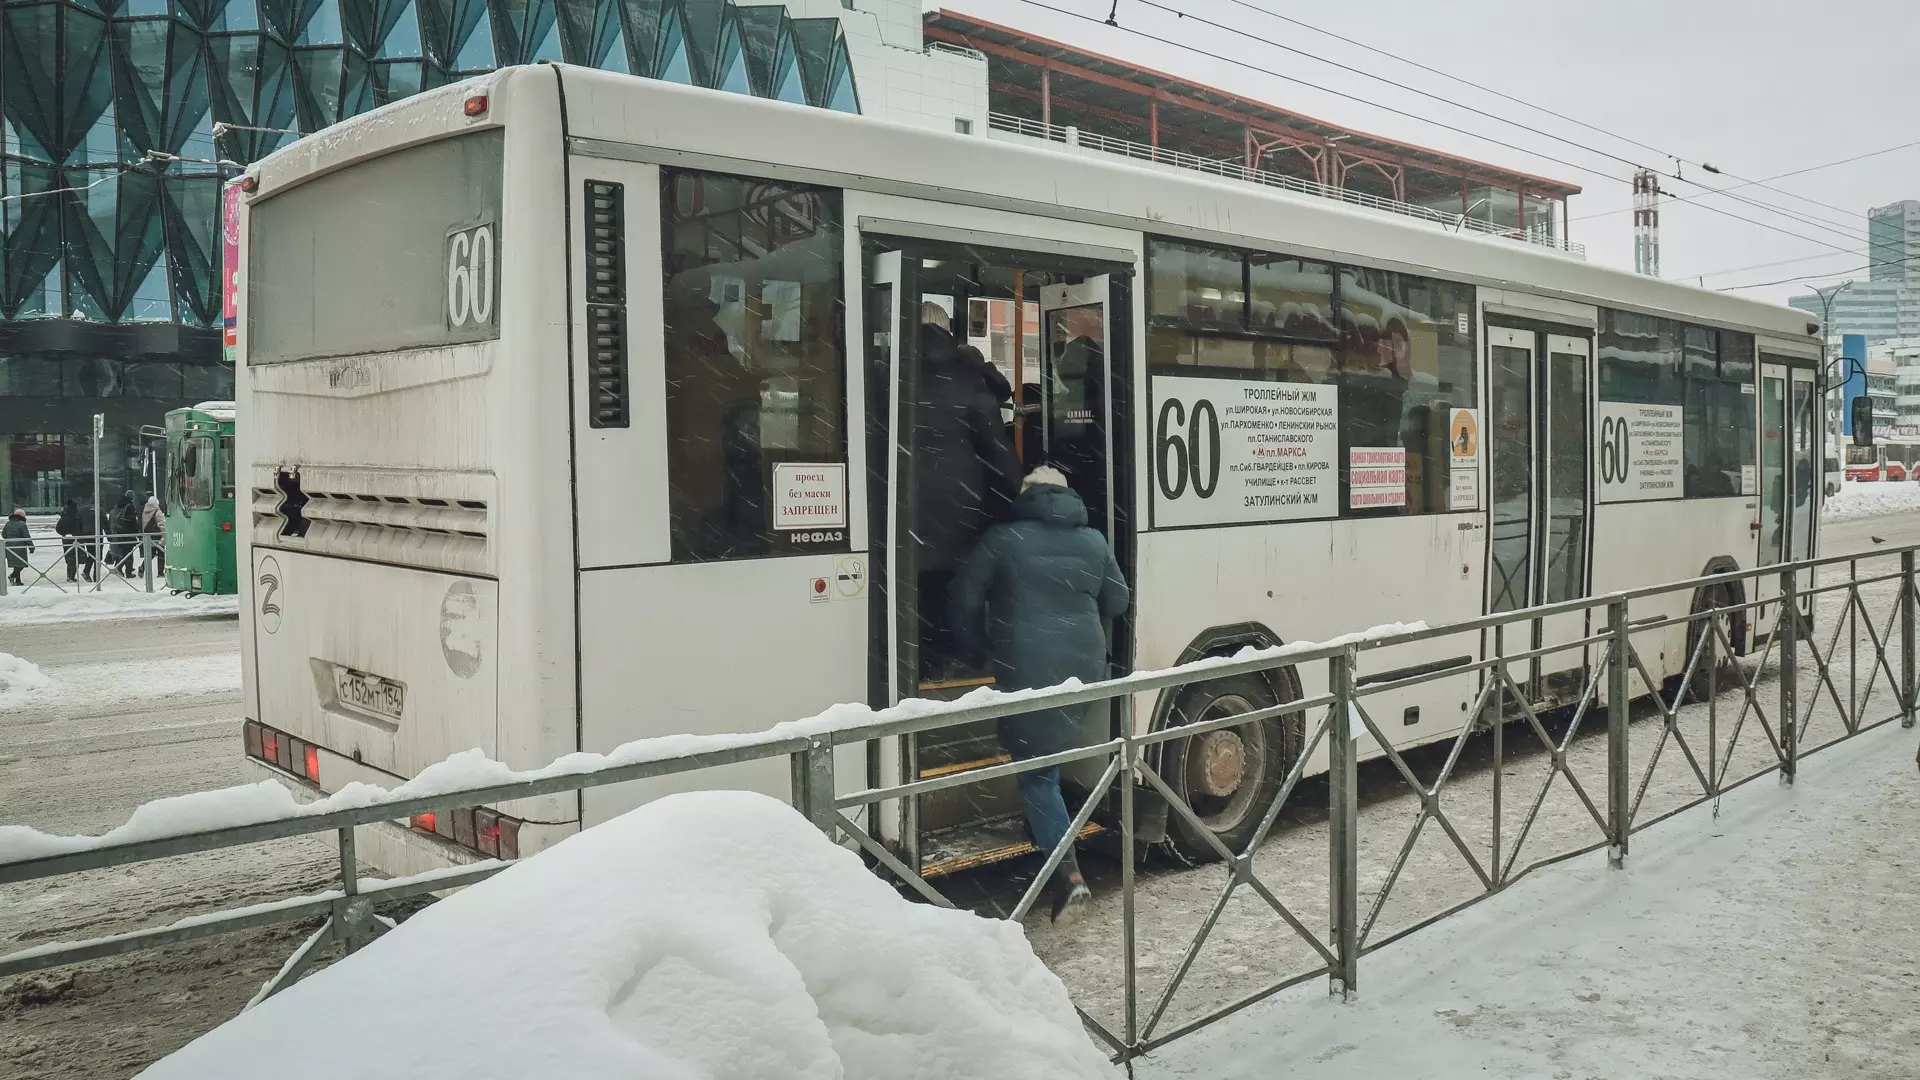 Оренбуржцы часами ждут автобусы в лютый мороз